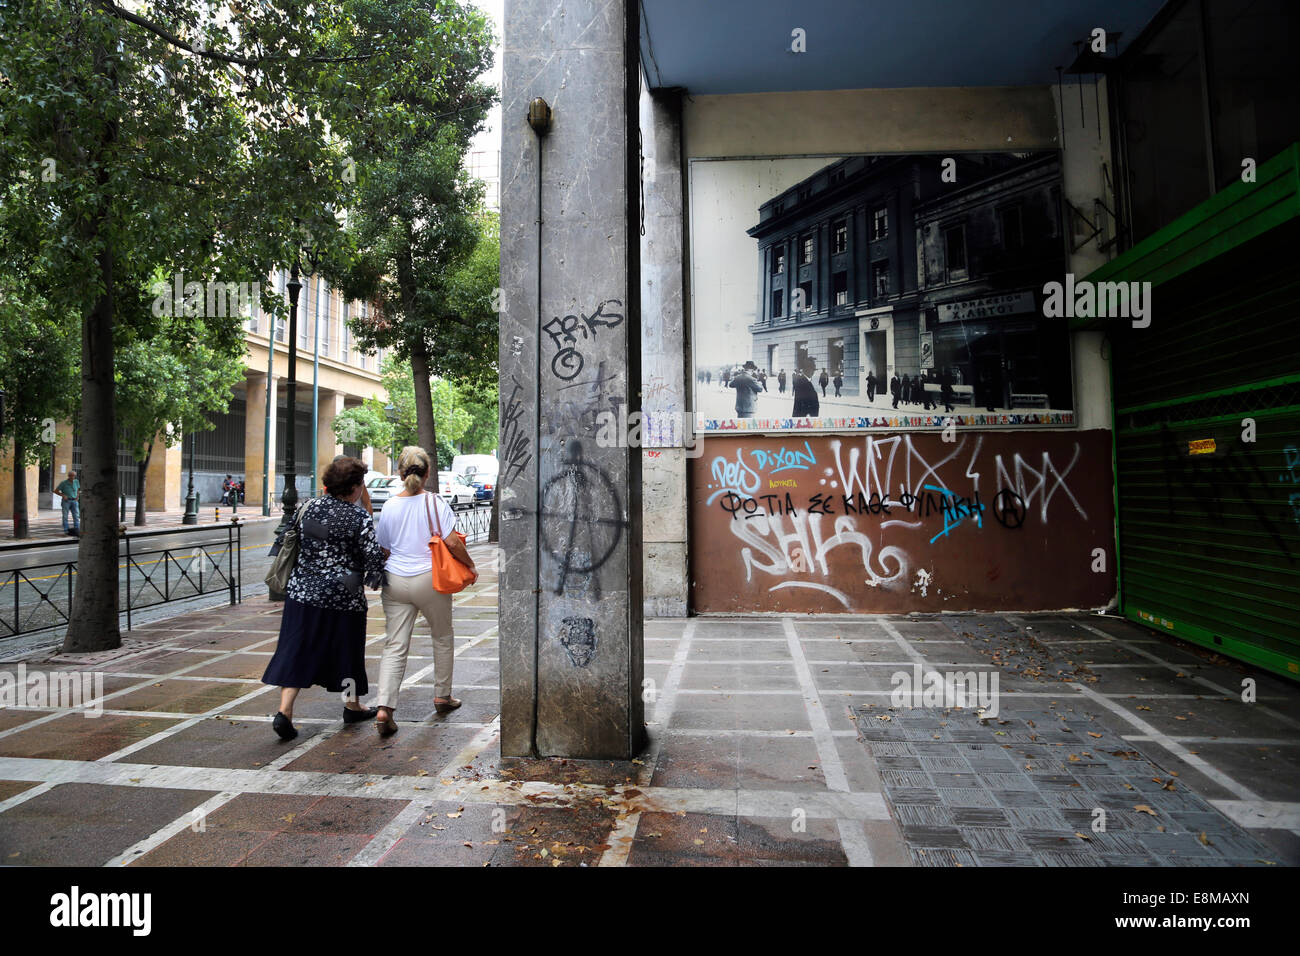 Athens Greece Graffiti Anarchy Symbol Pedestrians On Street Stock Photo